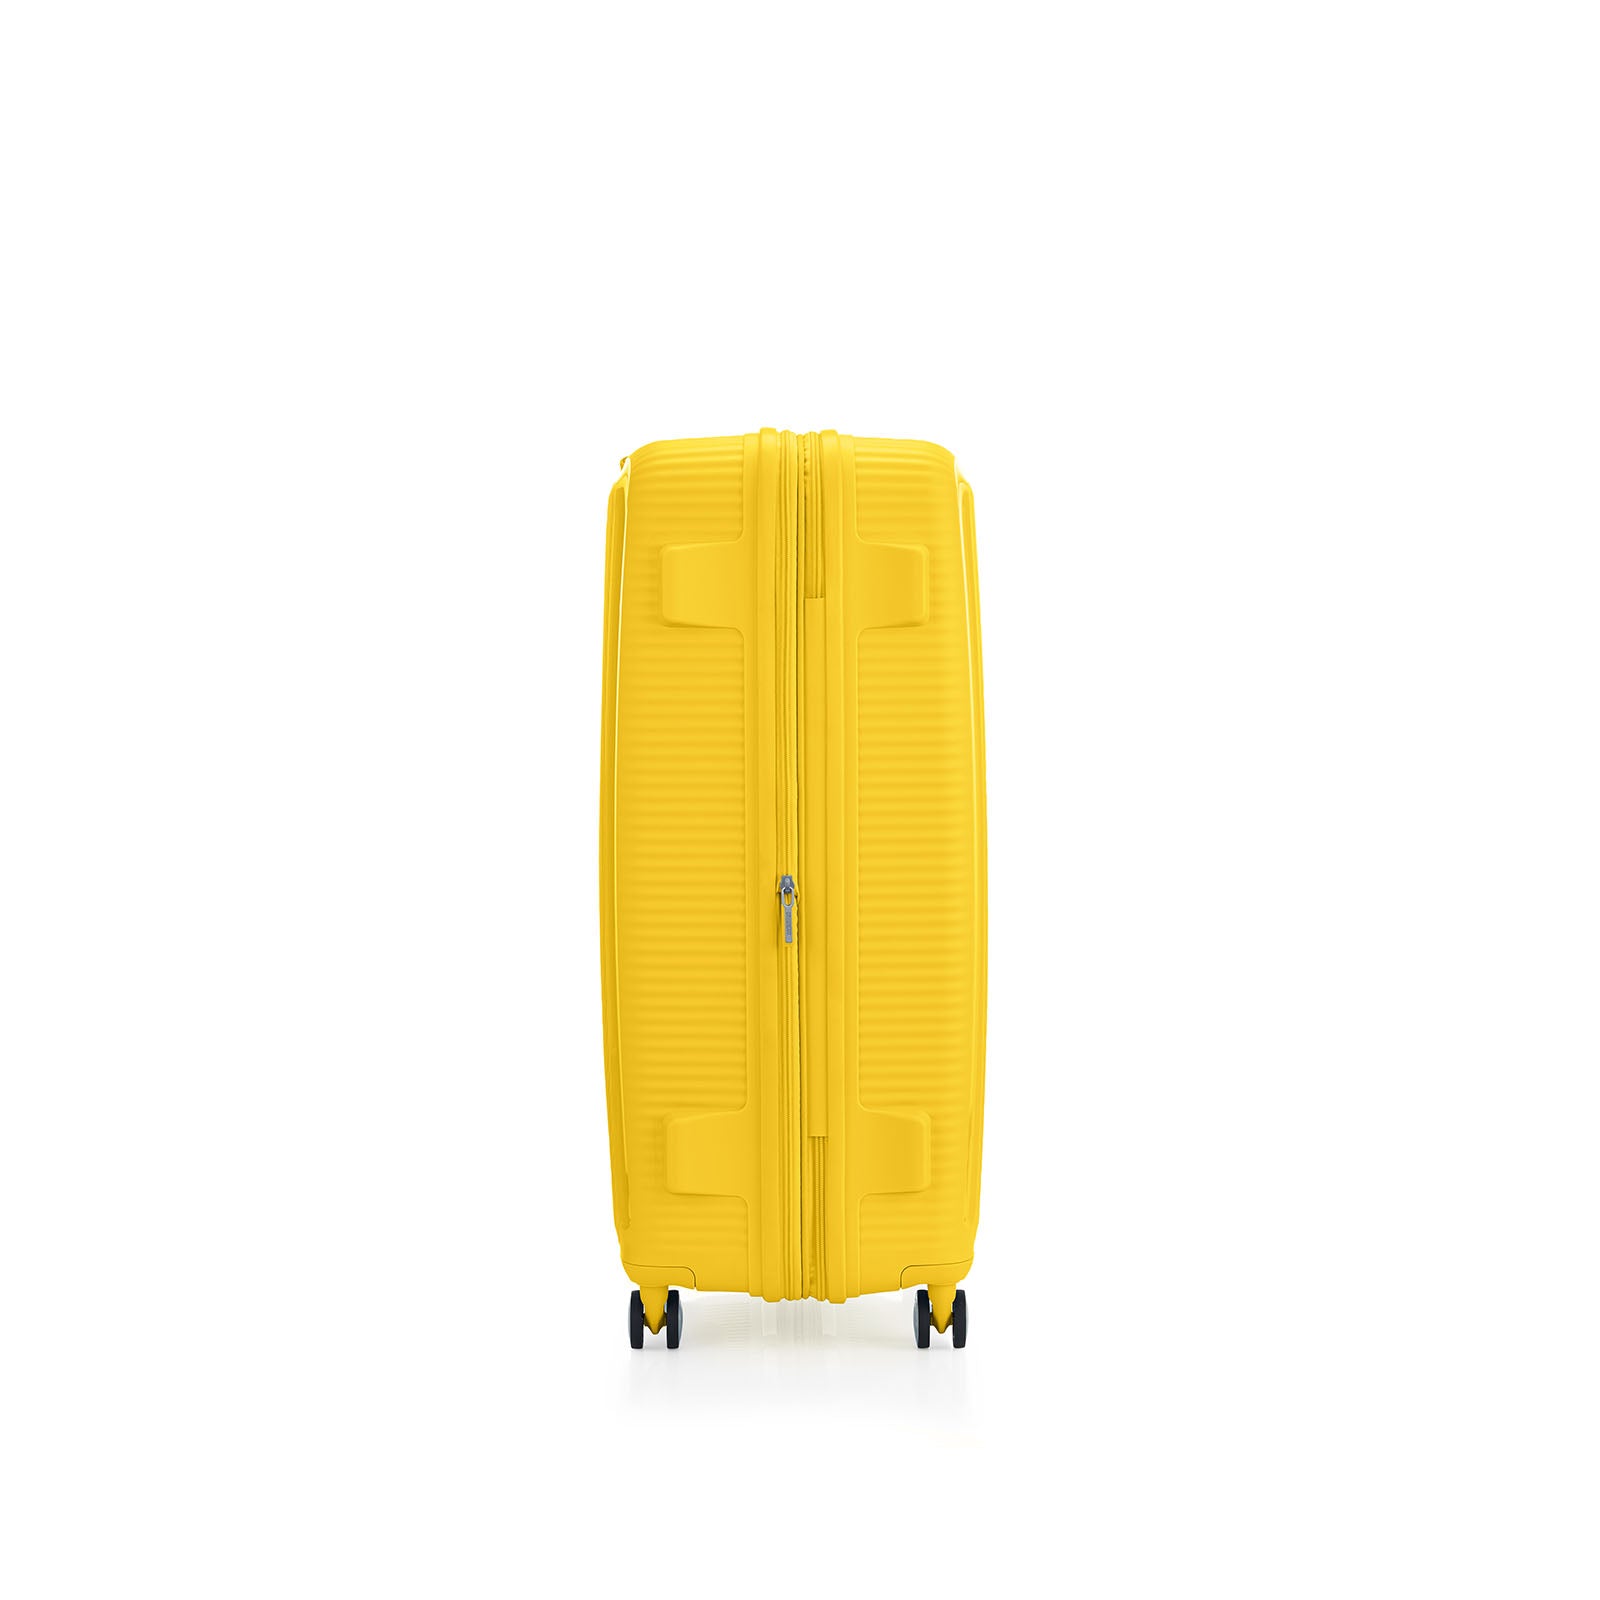 American-Tourister-Curio-2-80cm-Suitcase-Golden-Yellow-Hinge